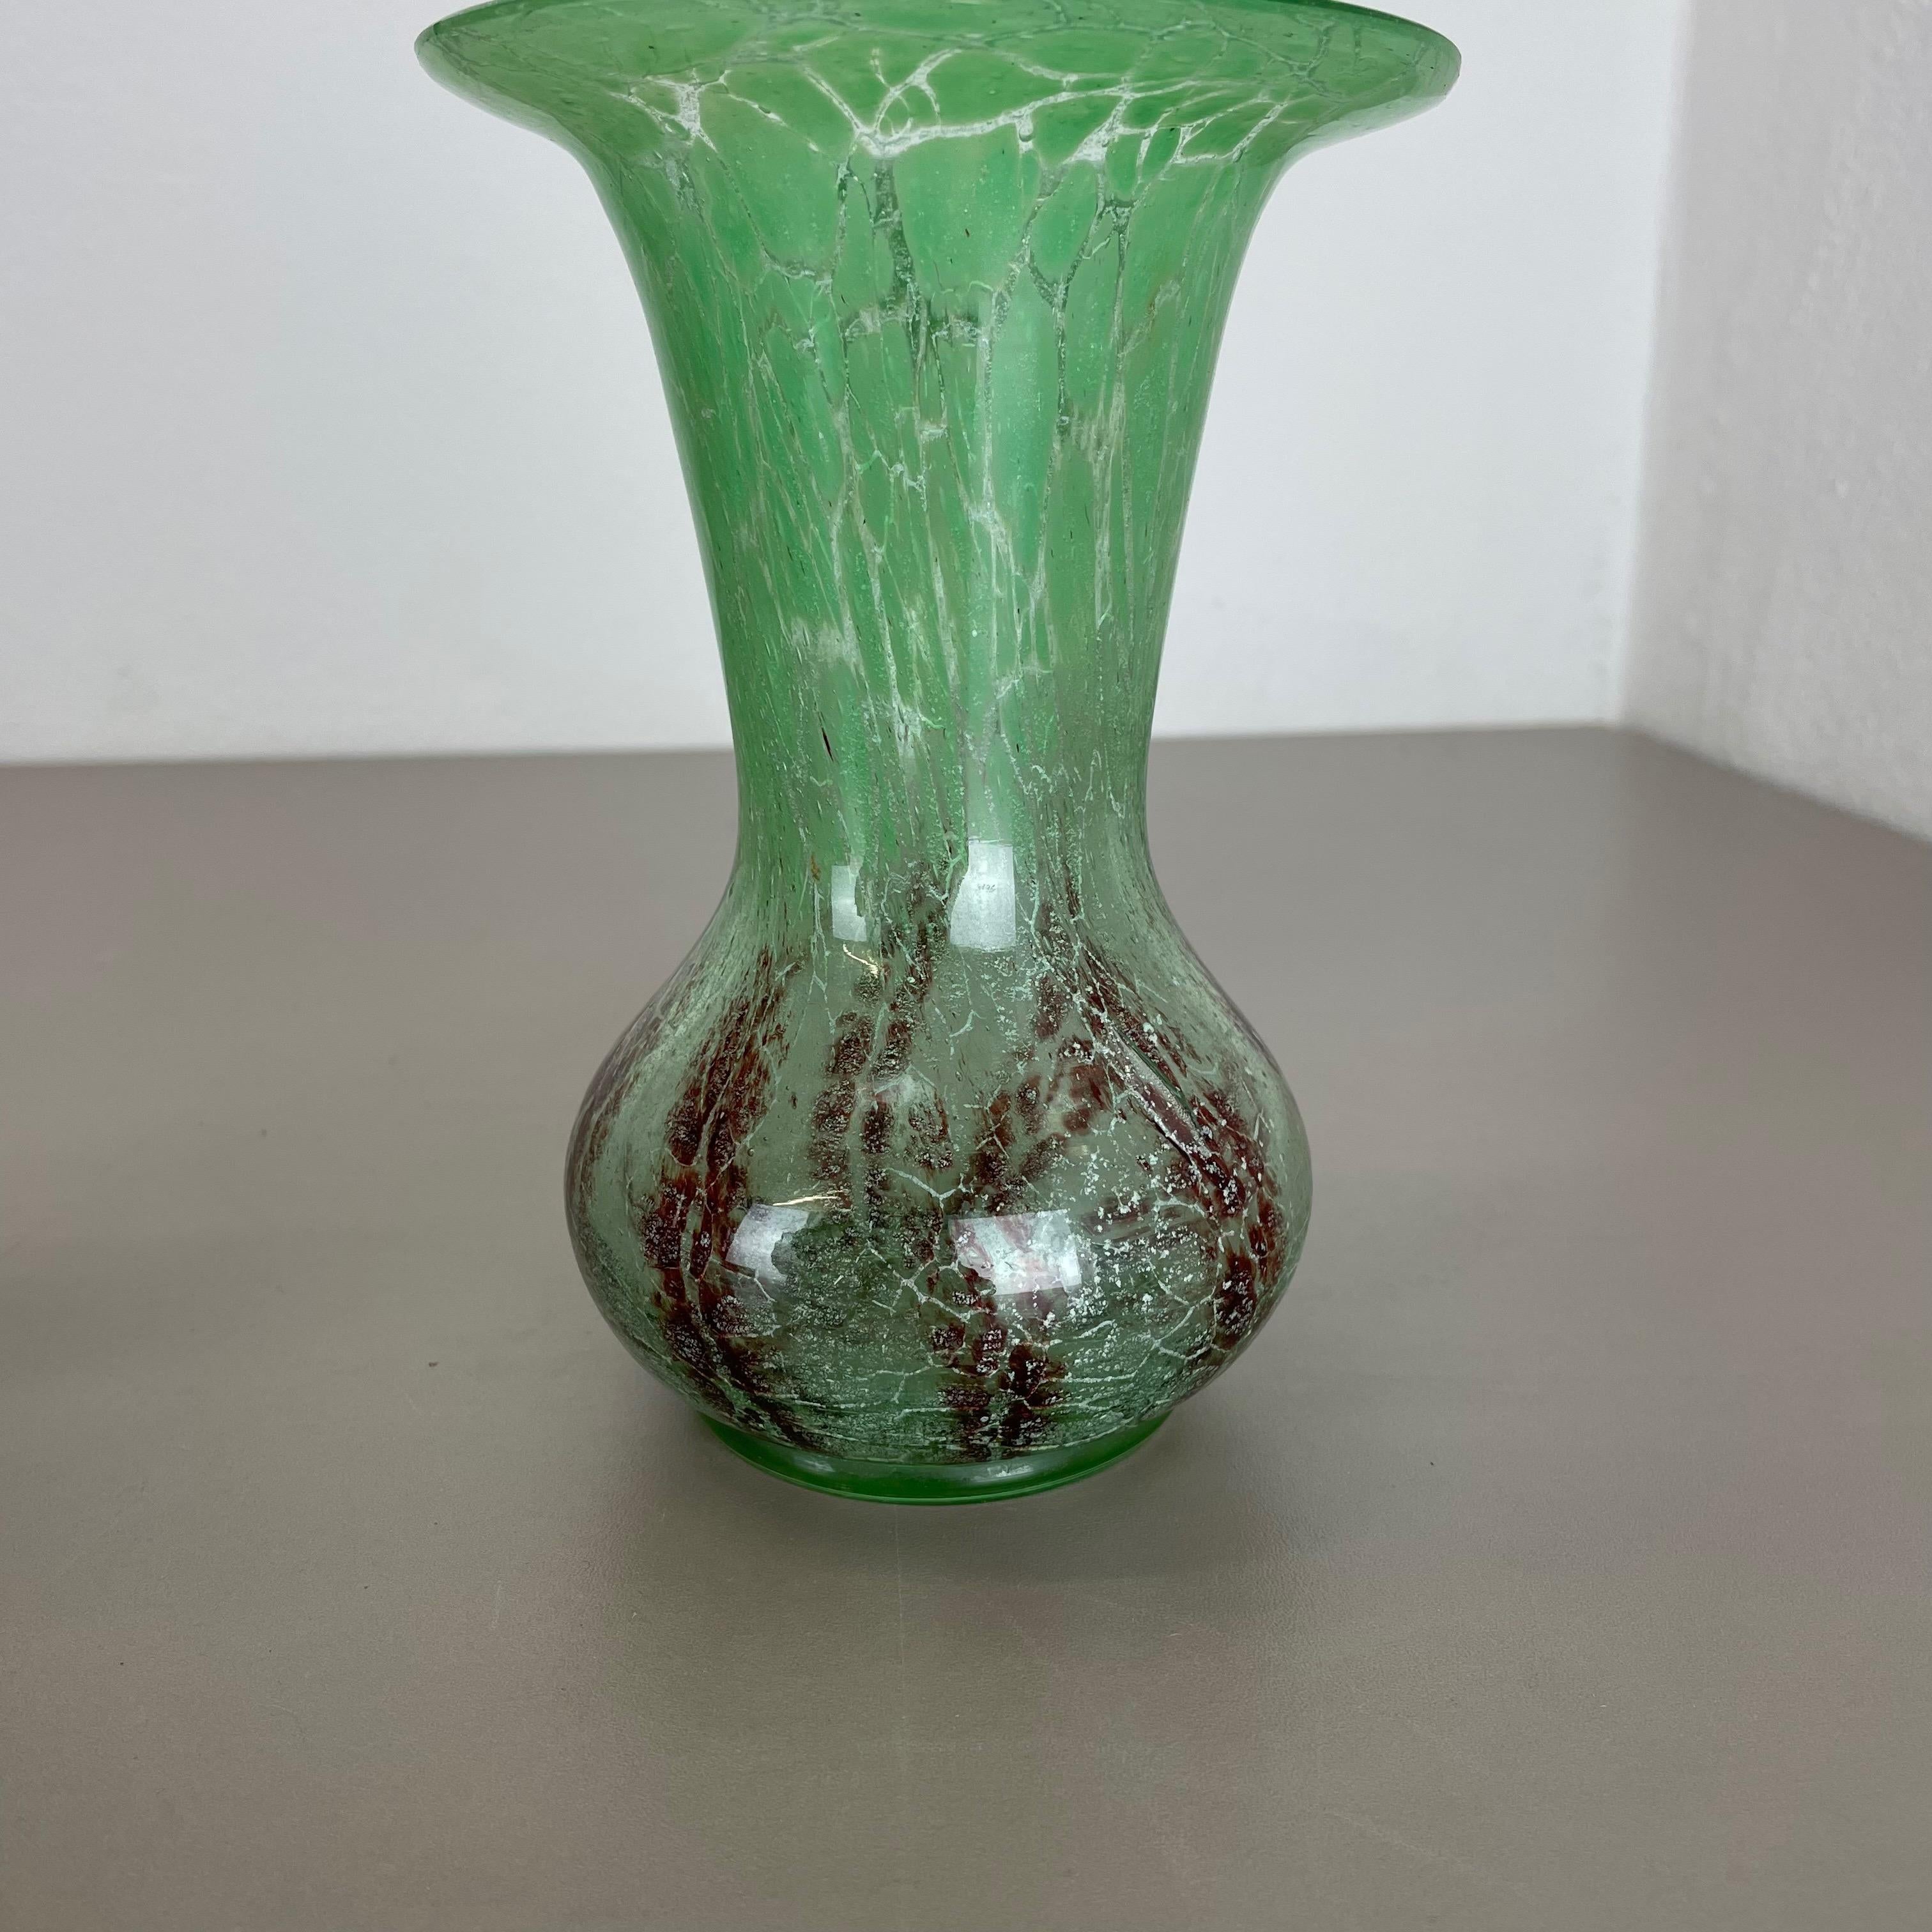 Set of 2 Ikora Glass Vases by Karl Wiedmann for WMF Germany, 1930s Bauhaus For Sale 5